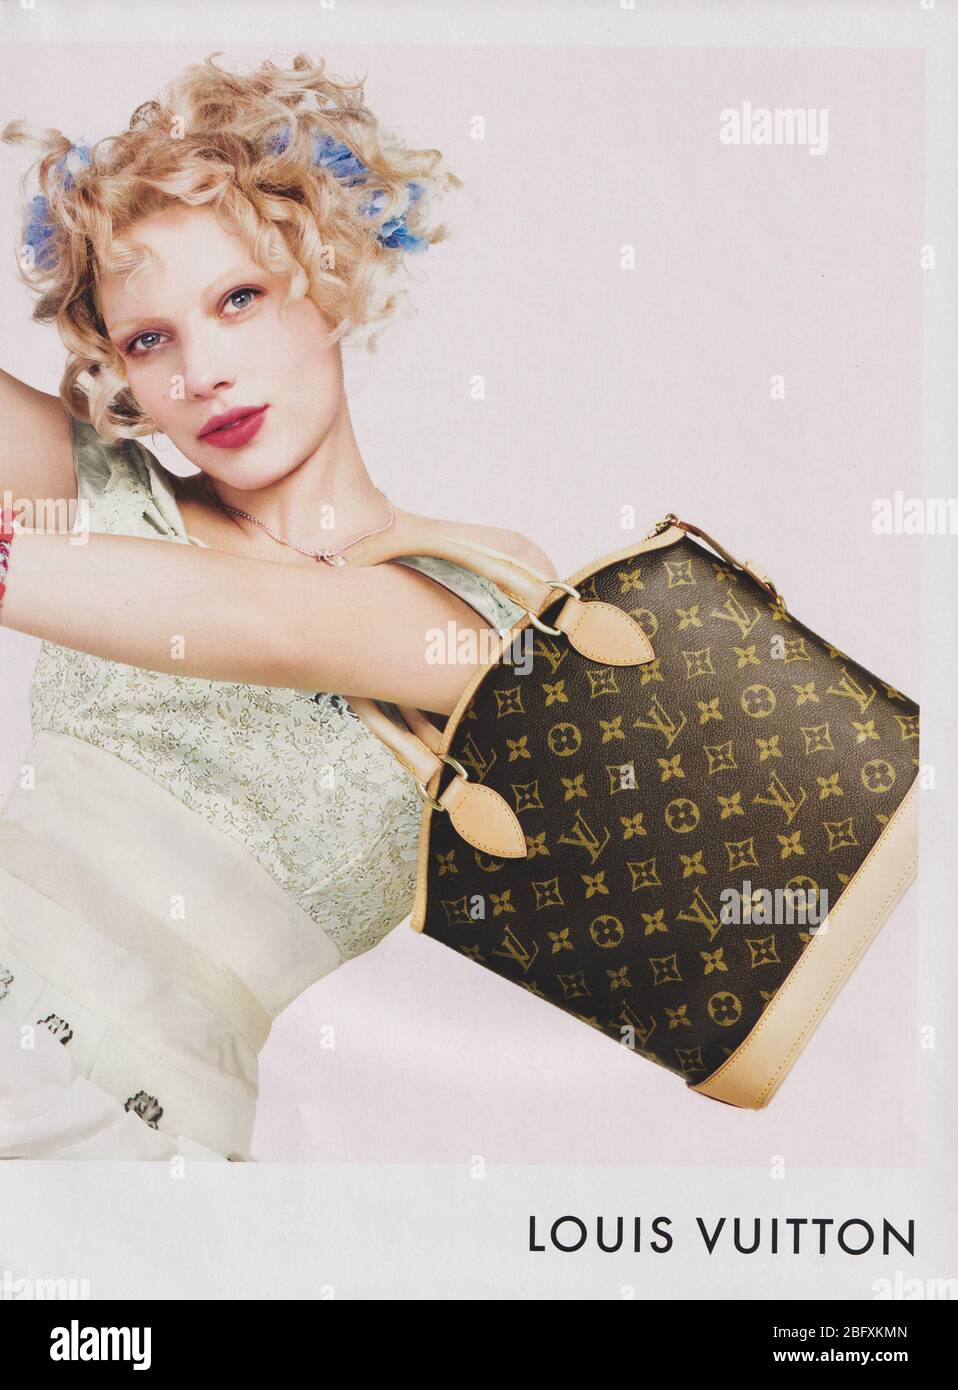 LOUIS VUITTON Bags Magazine Print Ad Advert handbag fashion